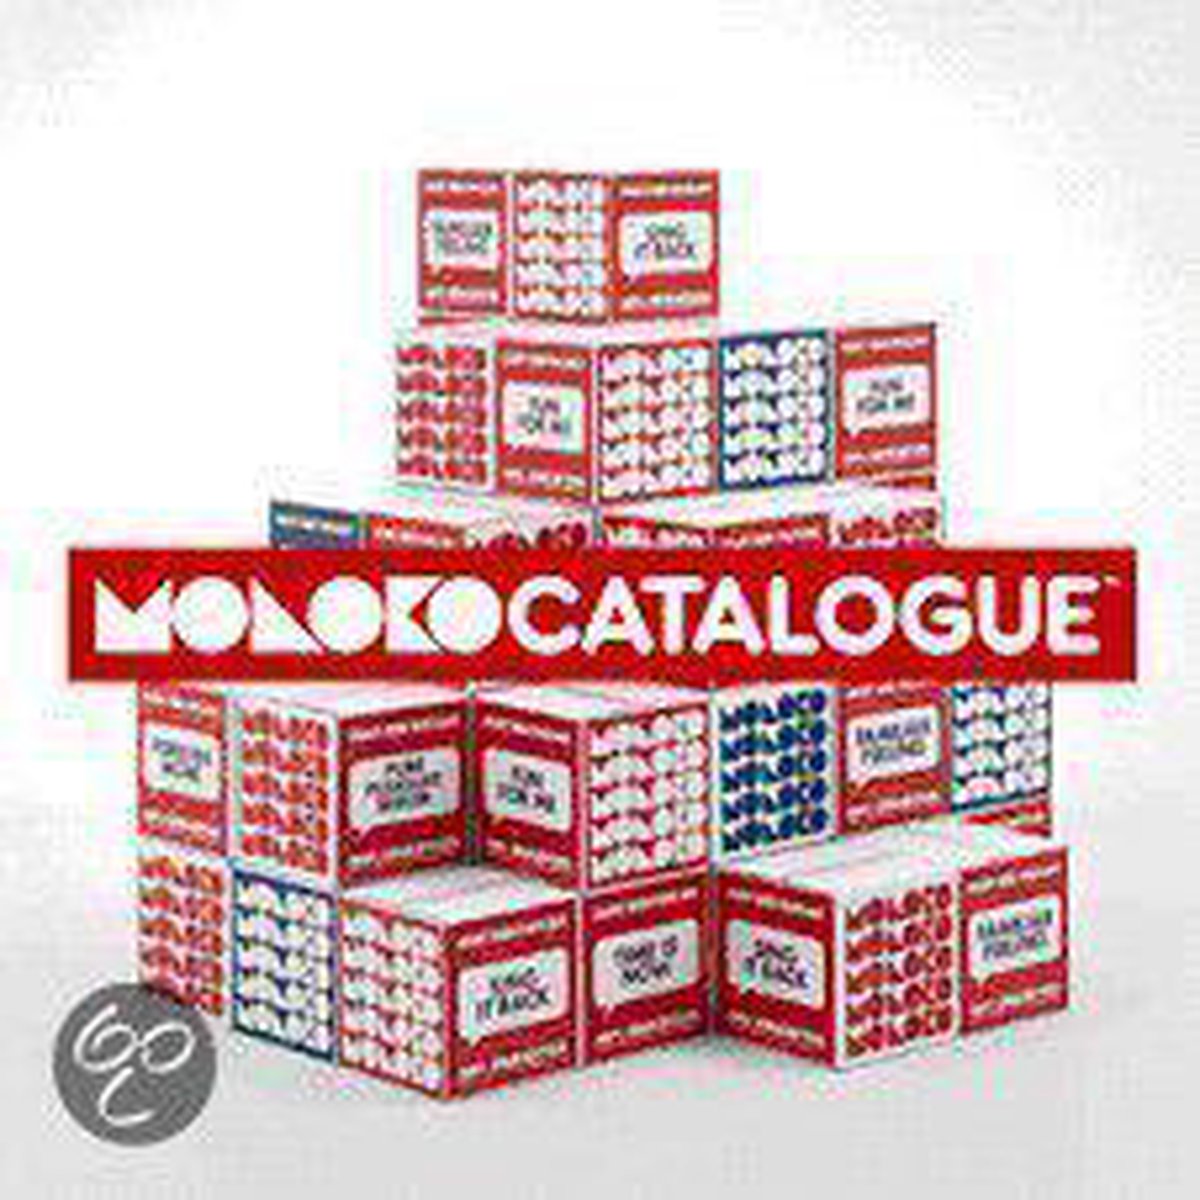 Moloko - Catalogue - Bonus Addition Internat - Moloko